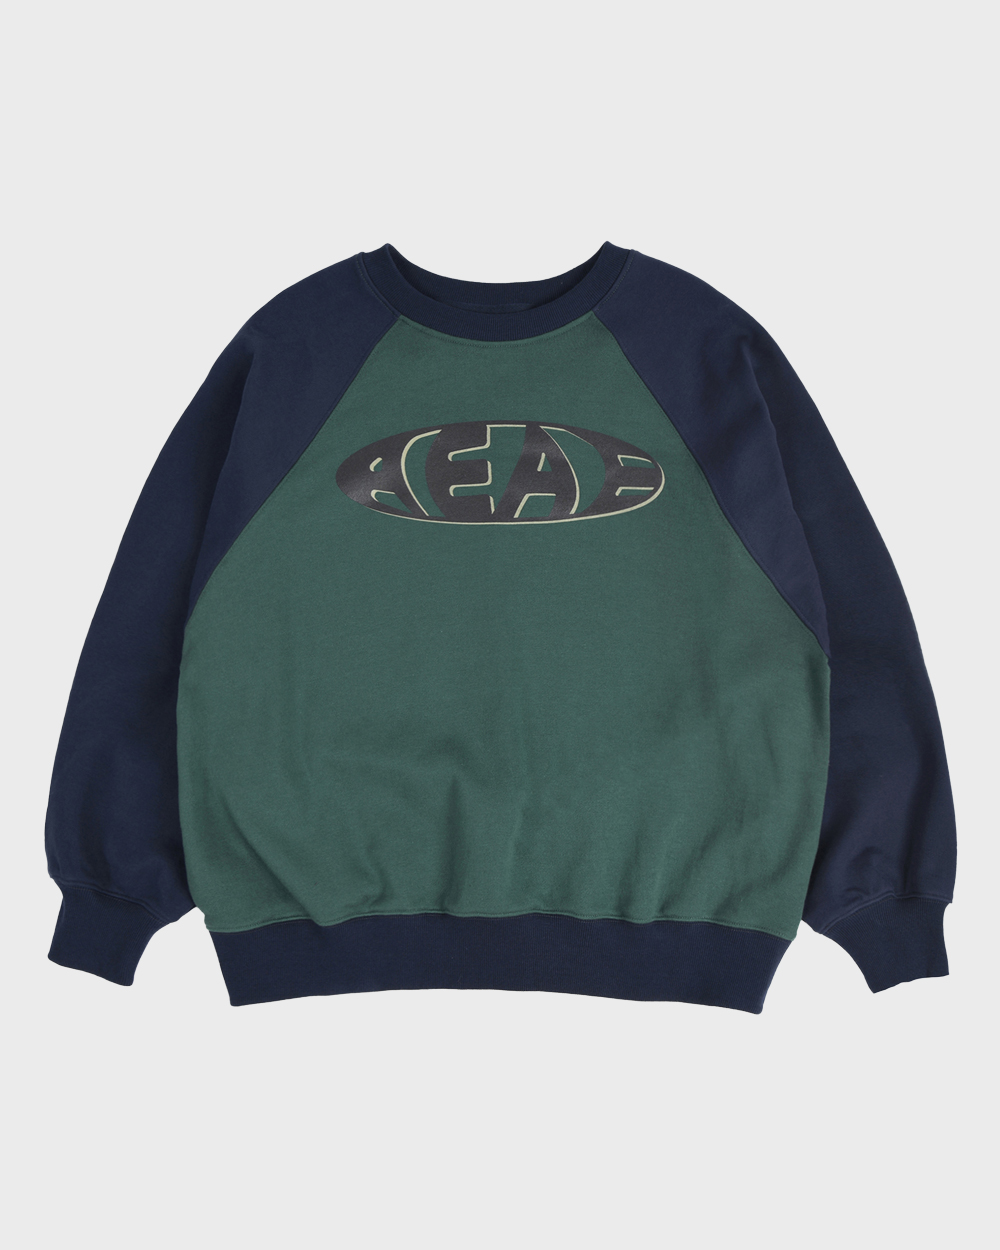 aeae Vintage Logo Raglan Sweatshirts (Navy/Green)